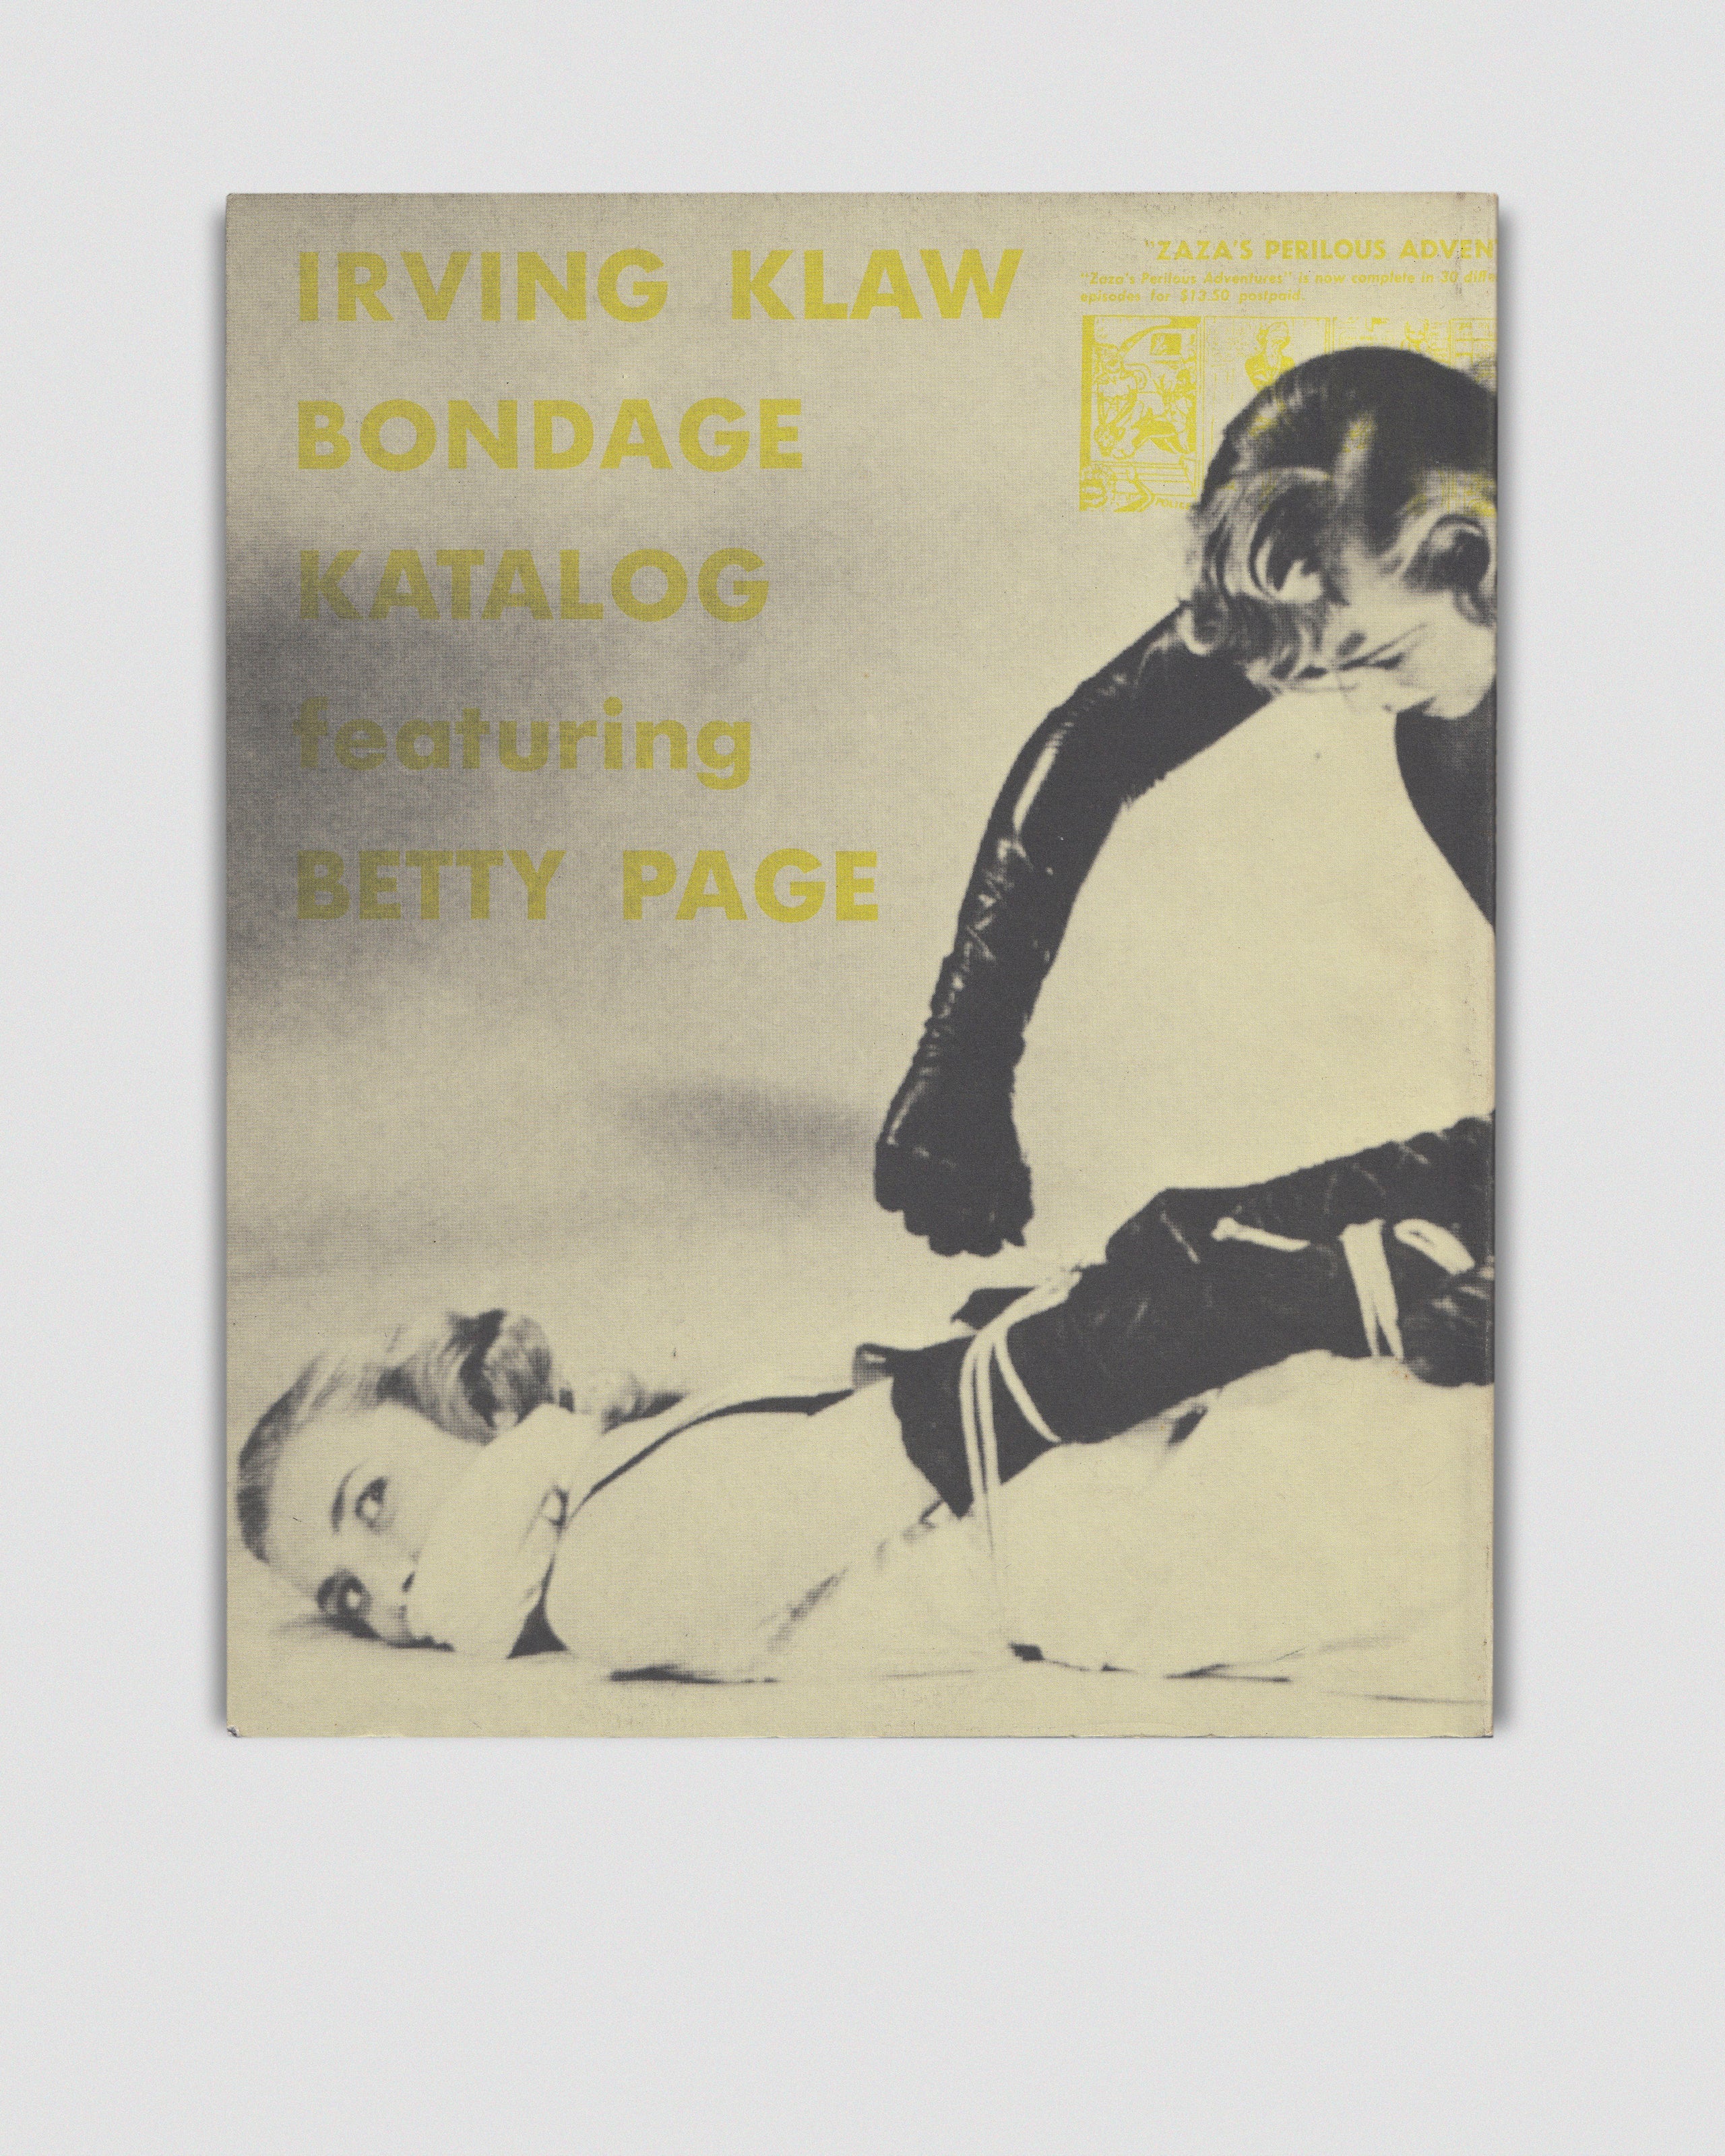 SALE2 no.34: Irving Klaw Bondage Katalog featuring Betty Page